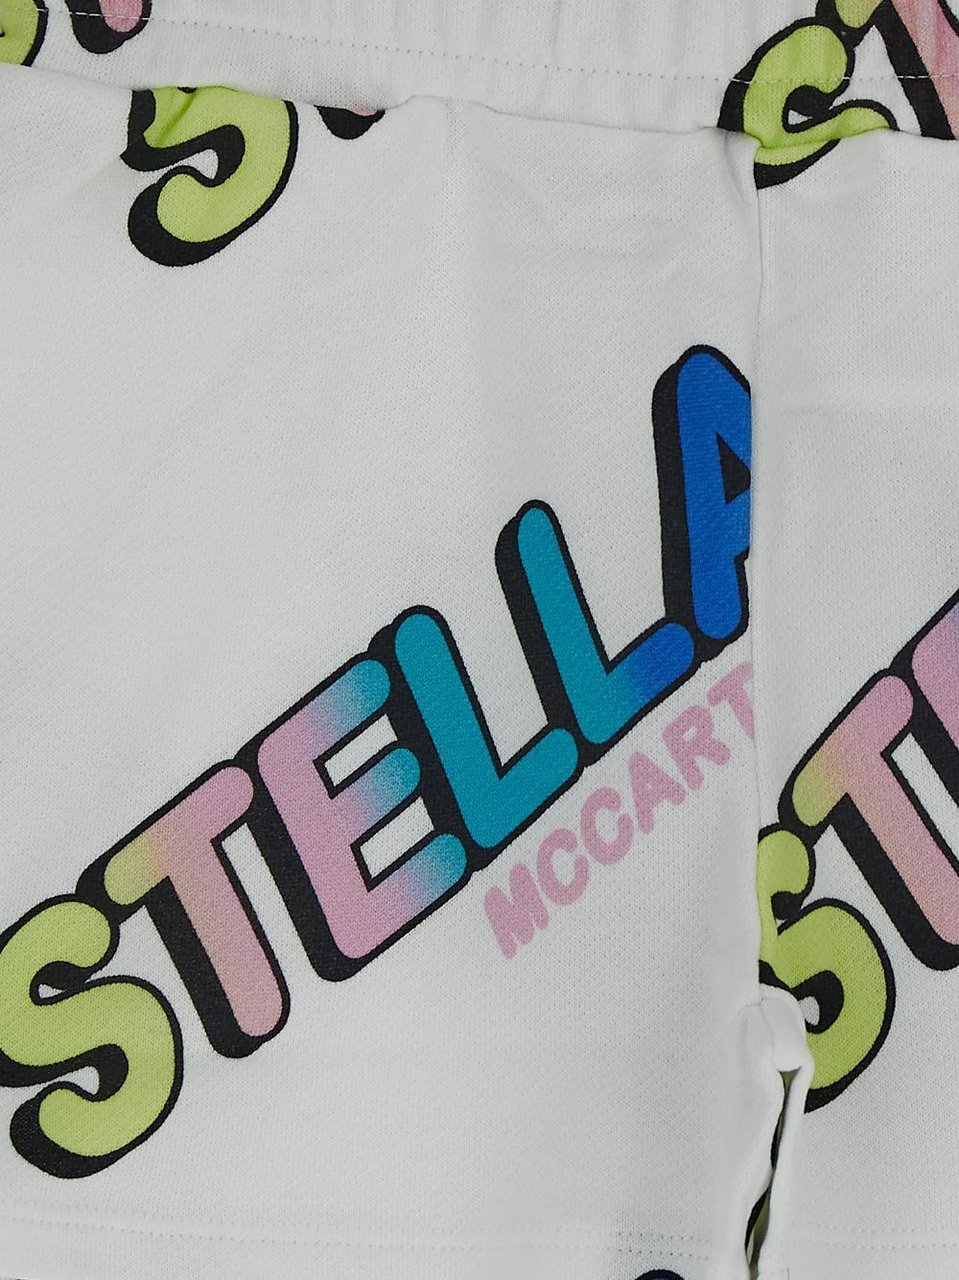 Stella McCartney Cotton Shorts Divers